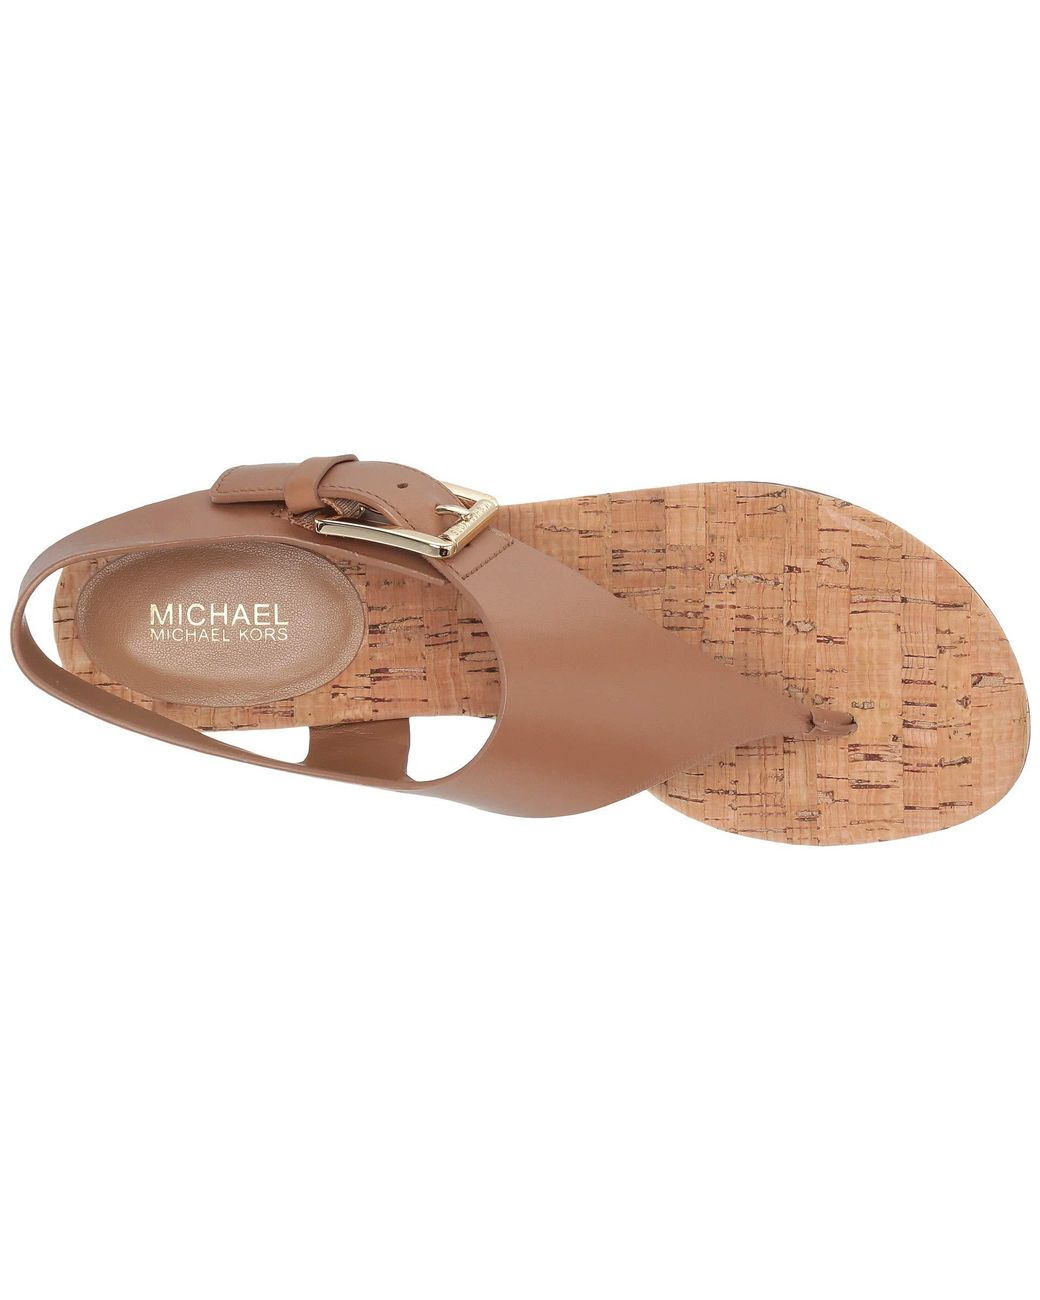 MICHAEL Michael Kors London Leather Thong Block Heel Sandals in Brown | Lyst